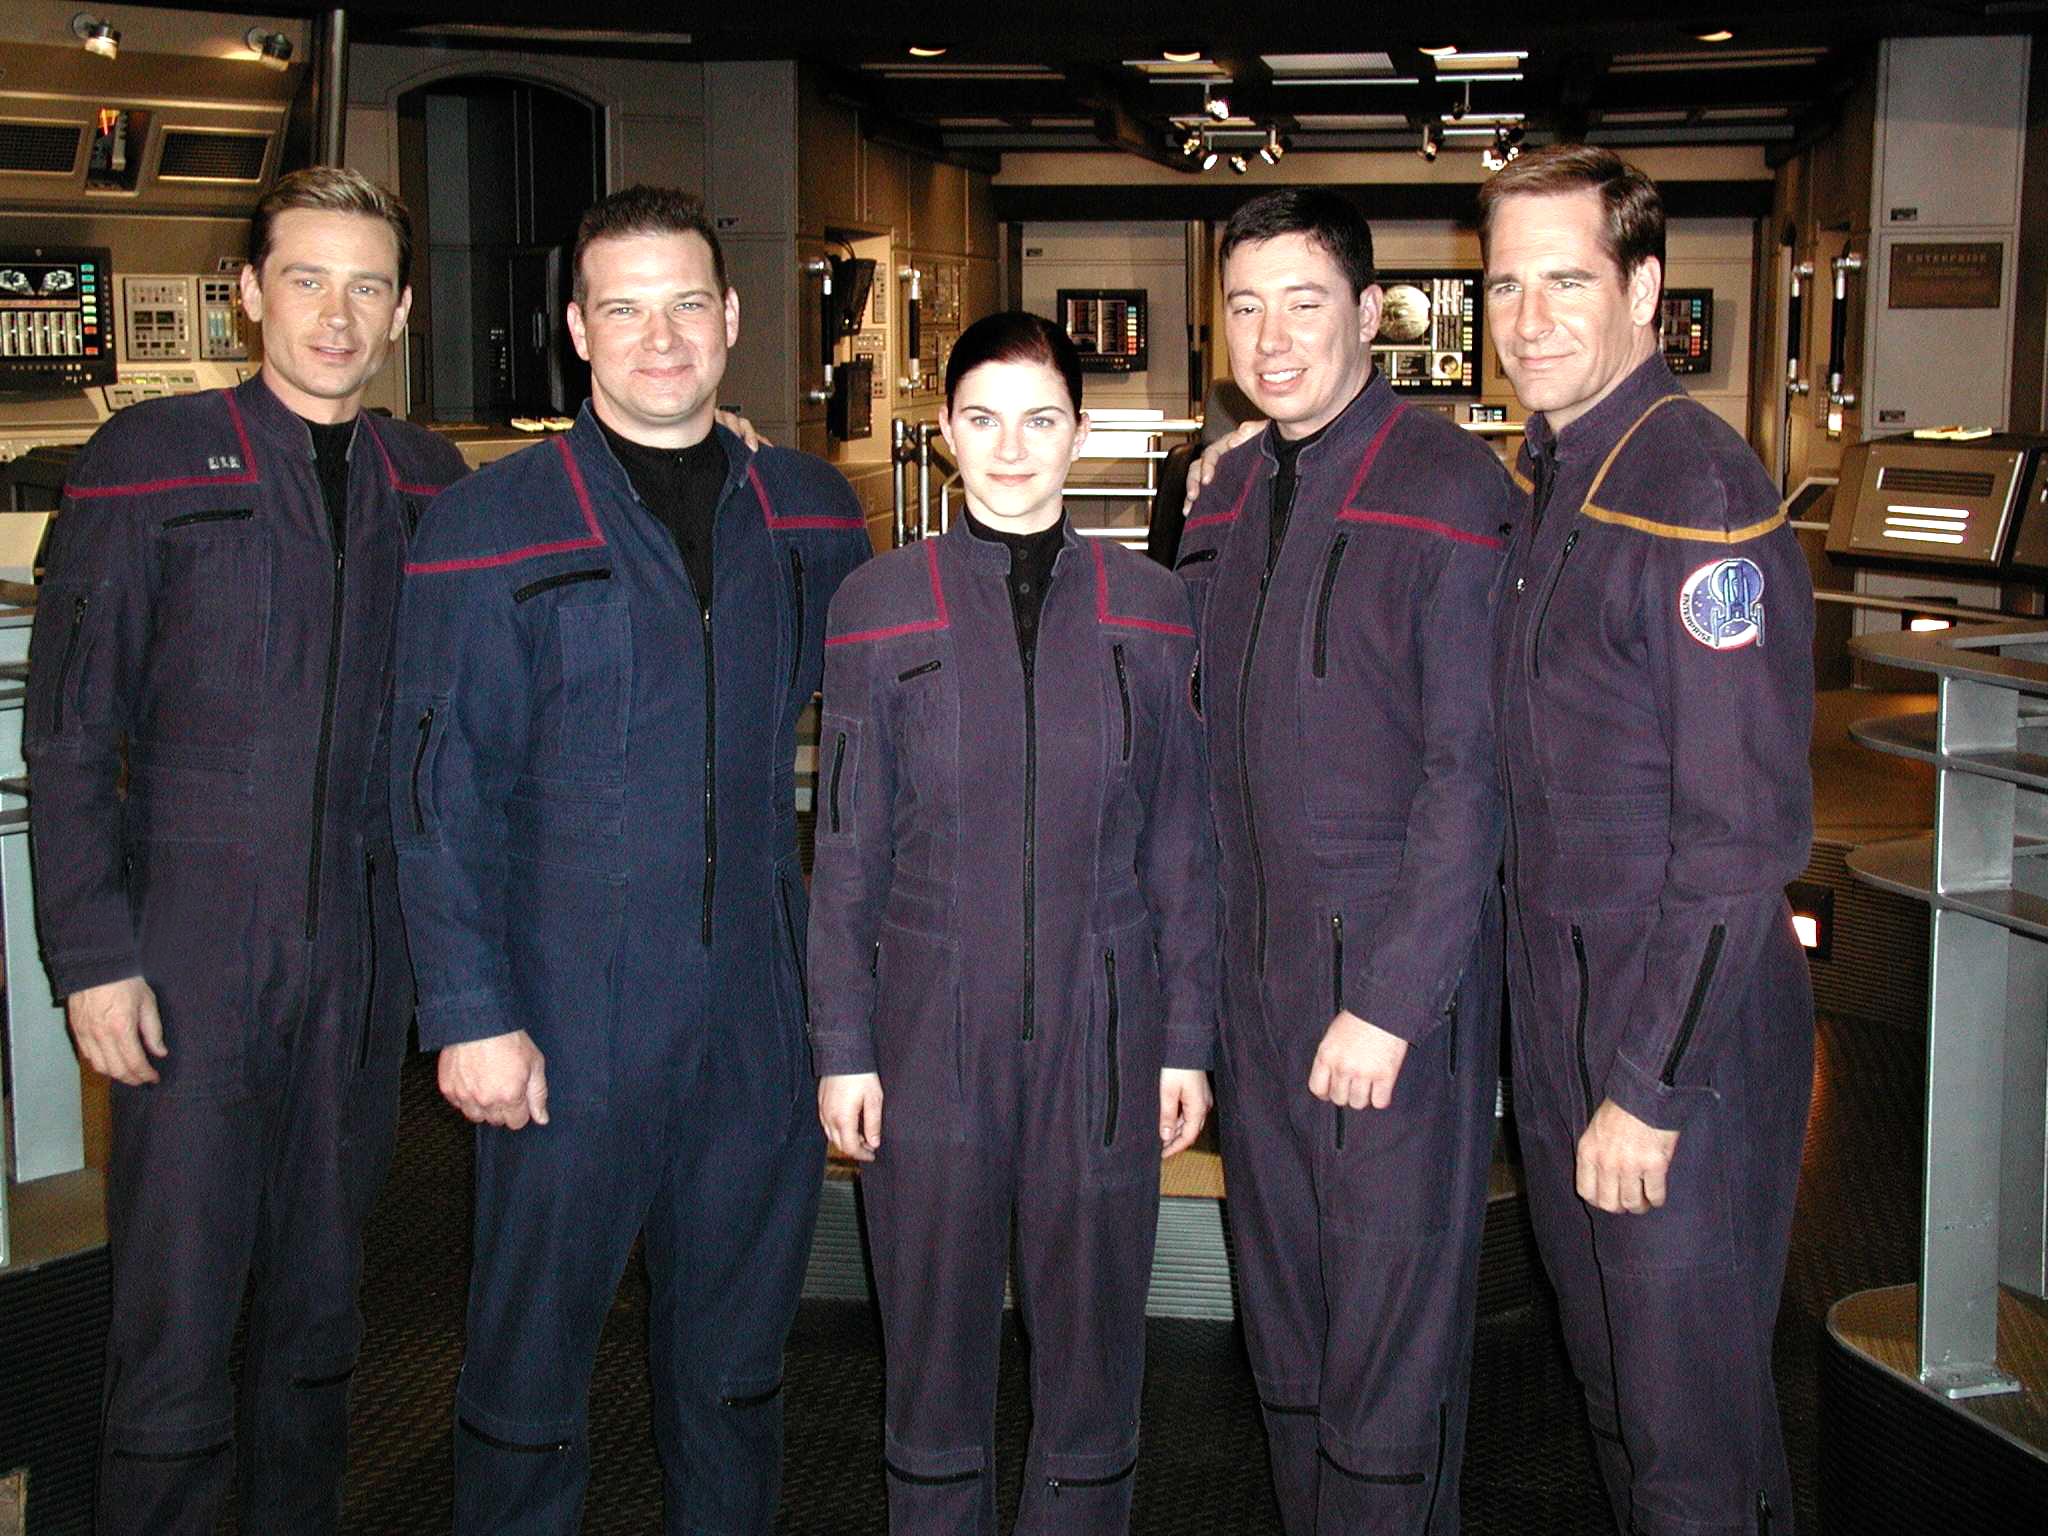 Enterprise Fans meet cast members